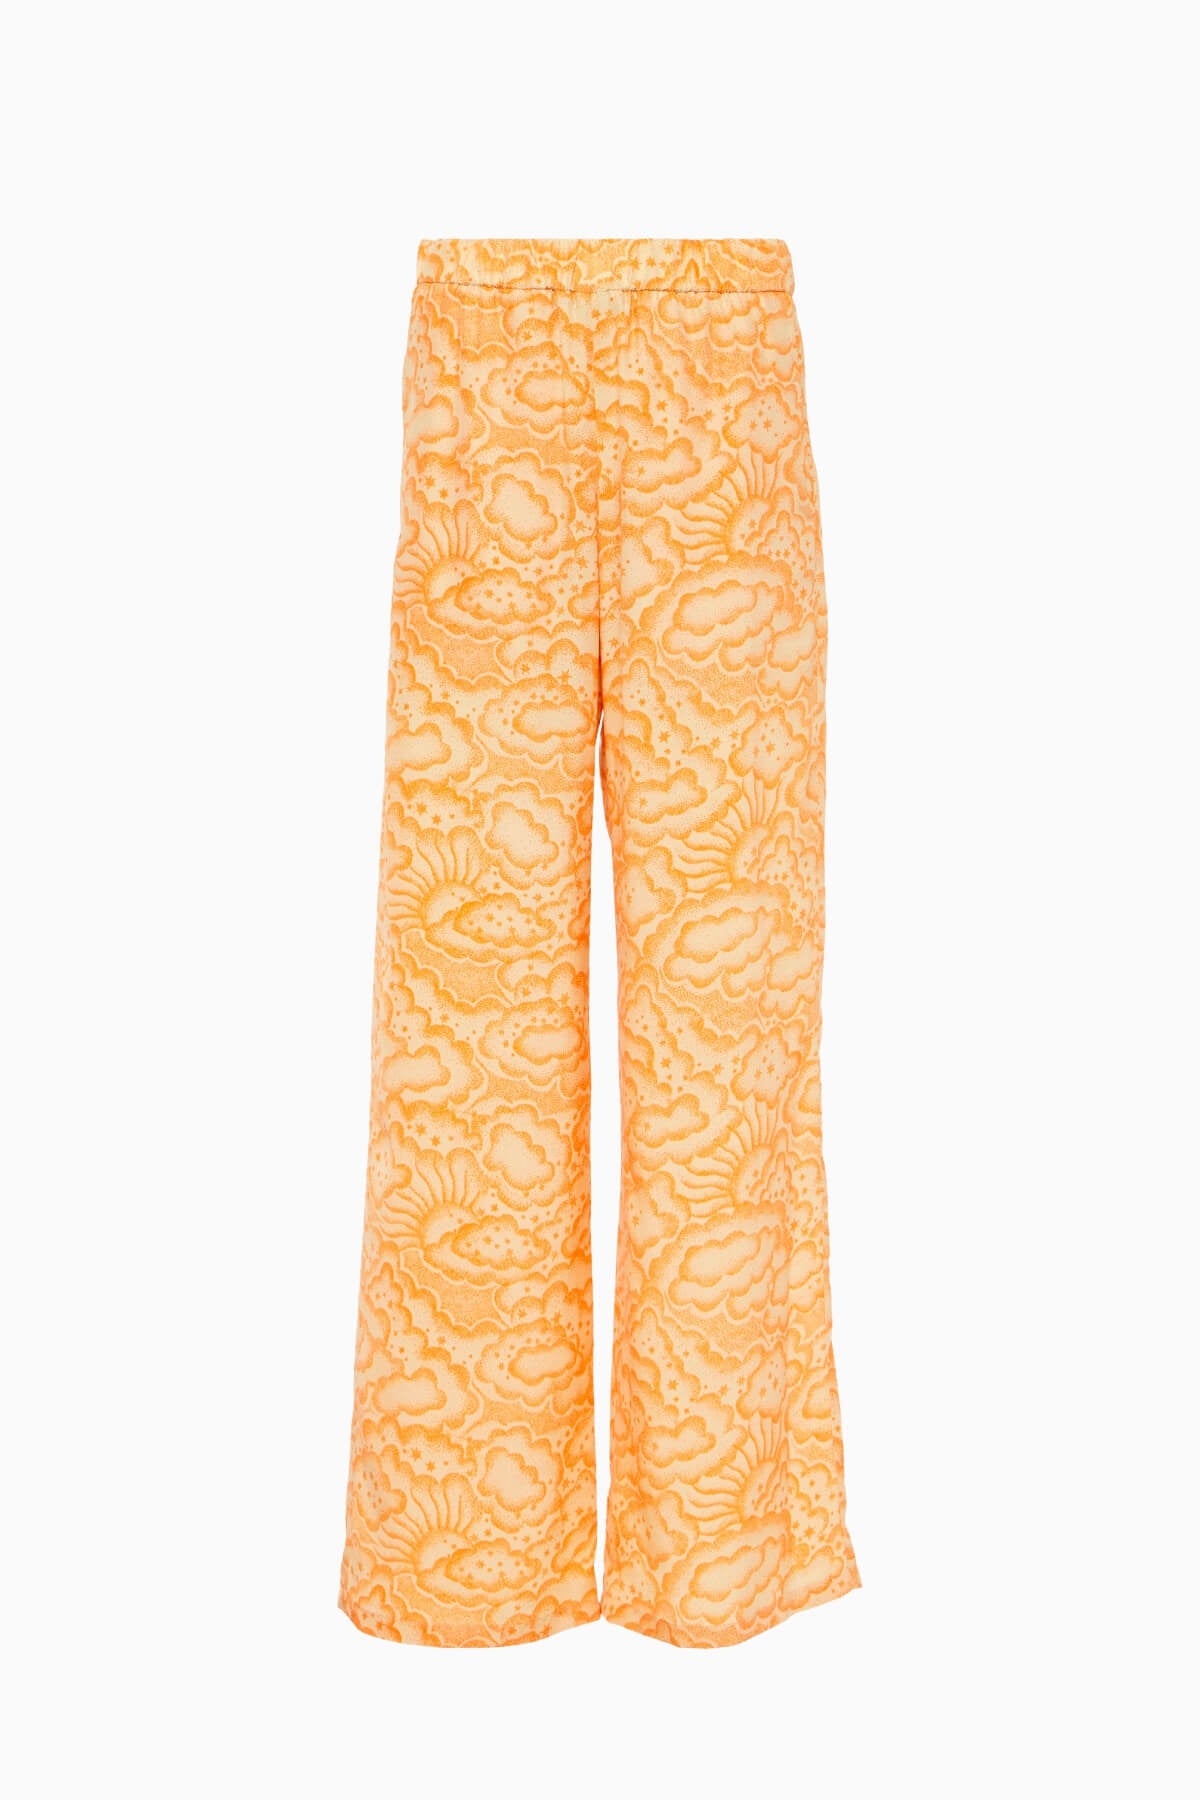 Stella McCartney Cloud Print Silk Pyjama Pant - Multi Orange